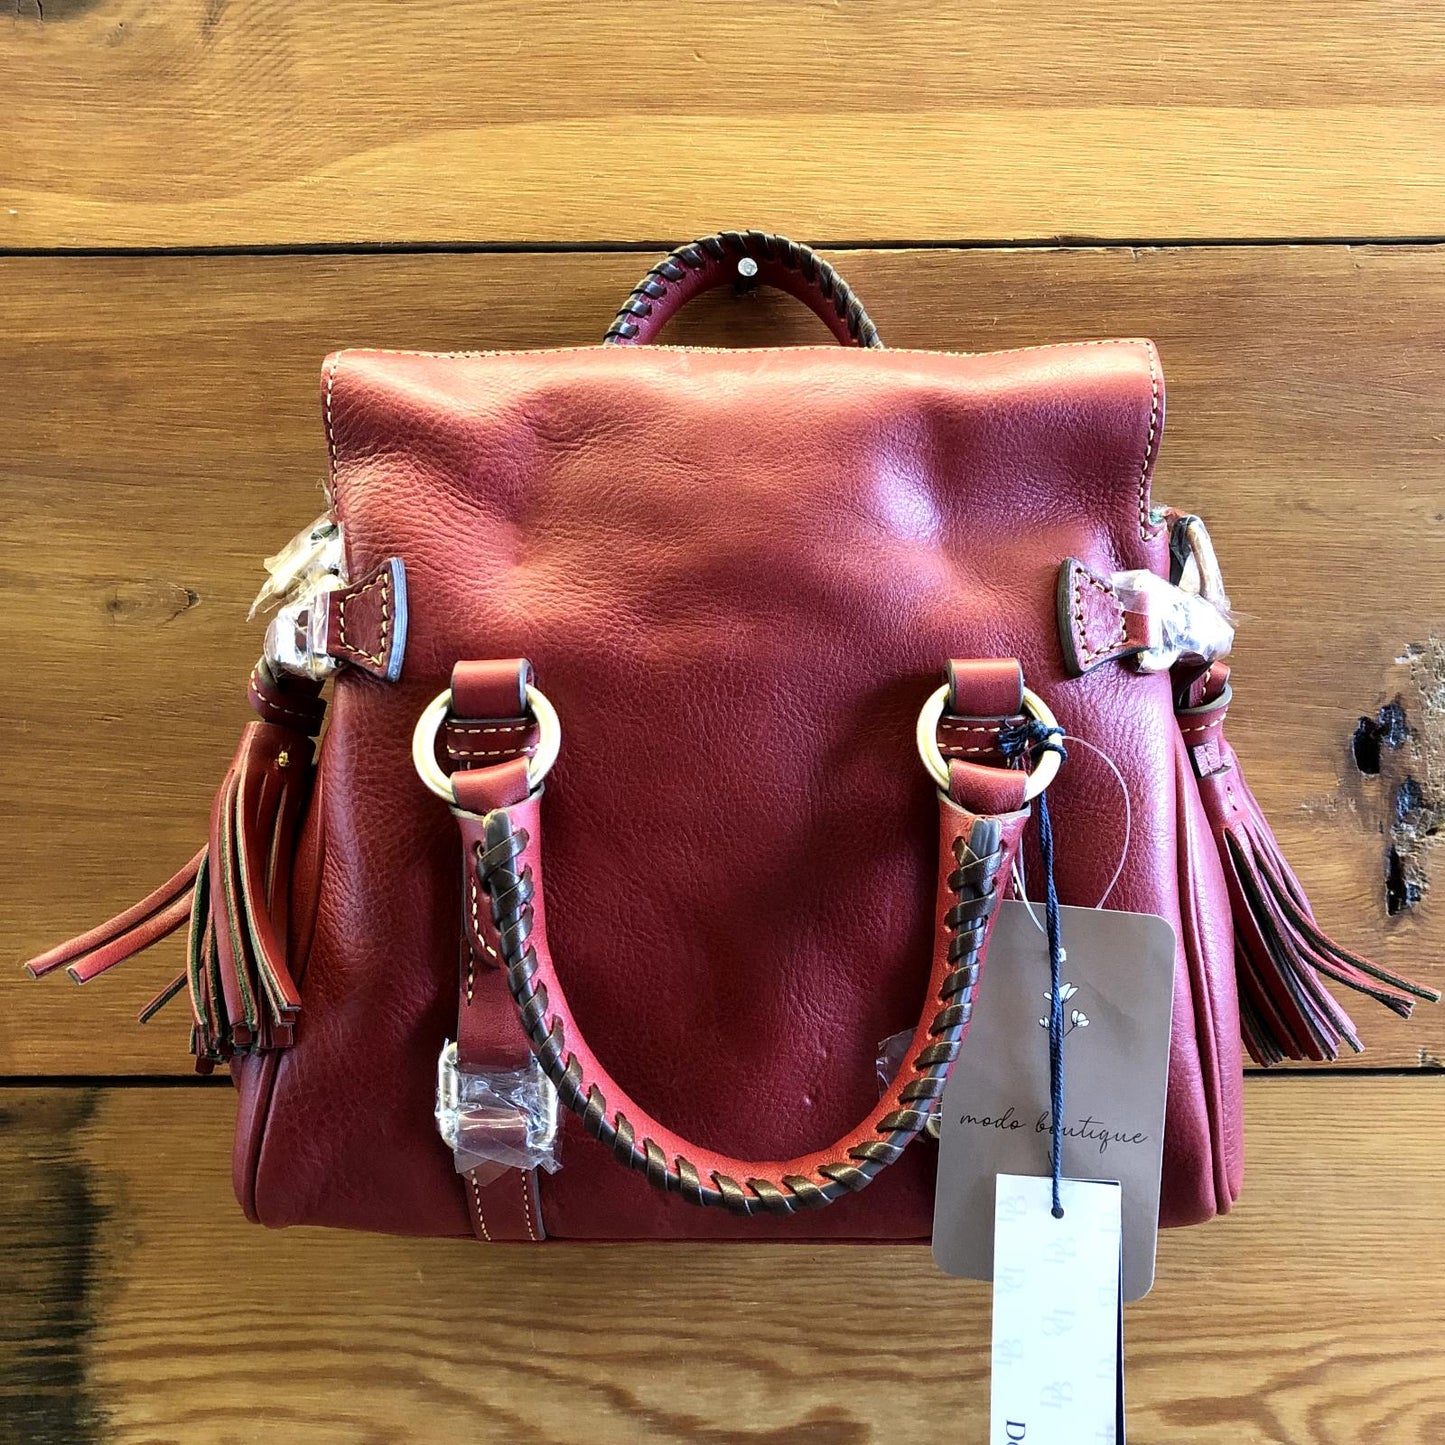 Dooney & Bourke $438 Red Florentine Leather Micro Satchel Purse NEW 0221PG